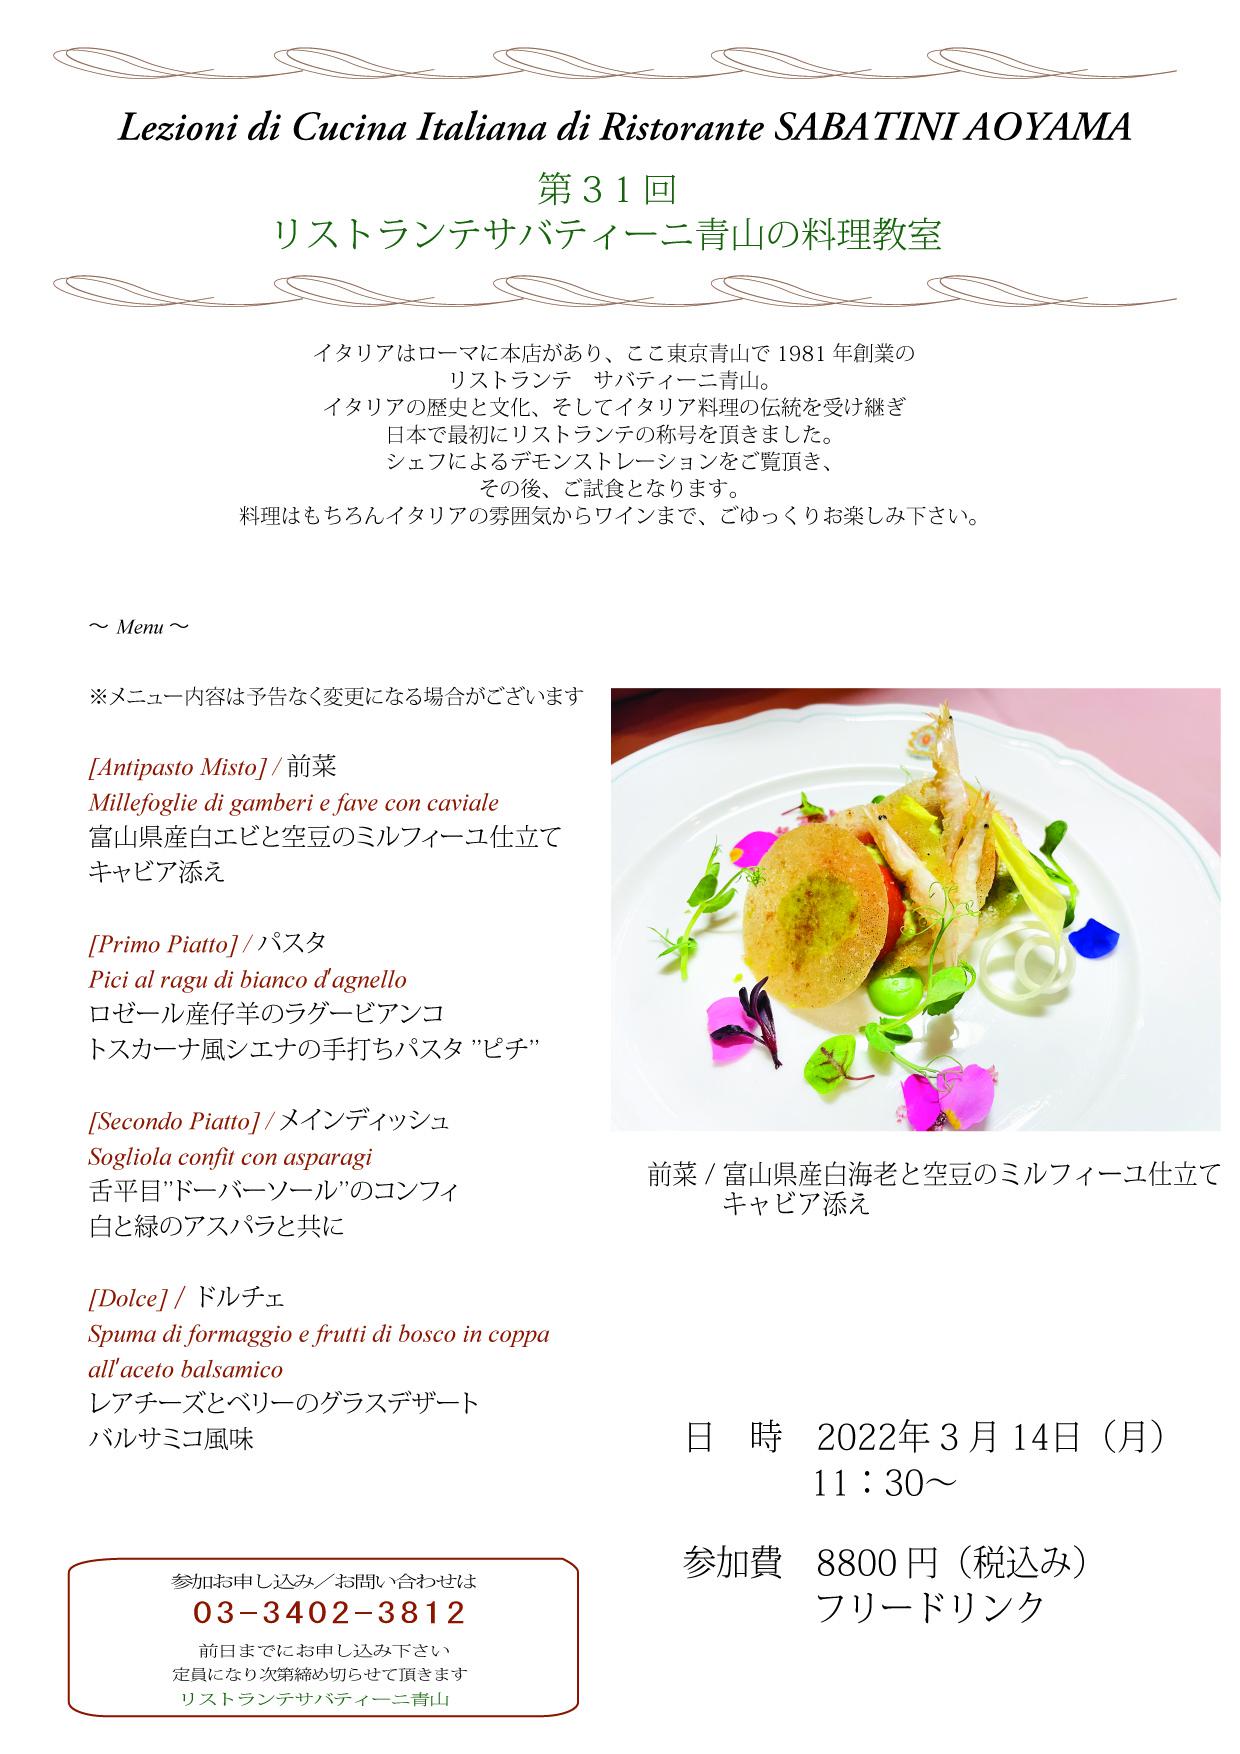 ■Ristorante SABATINI Aoyama【料理教室】2022.3.14（月）のお知らせ